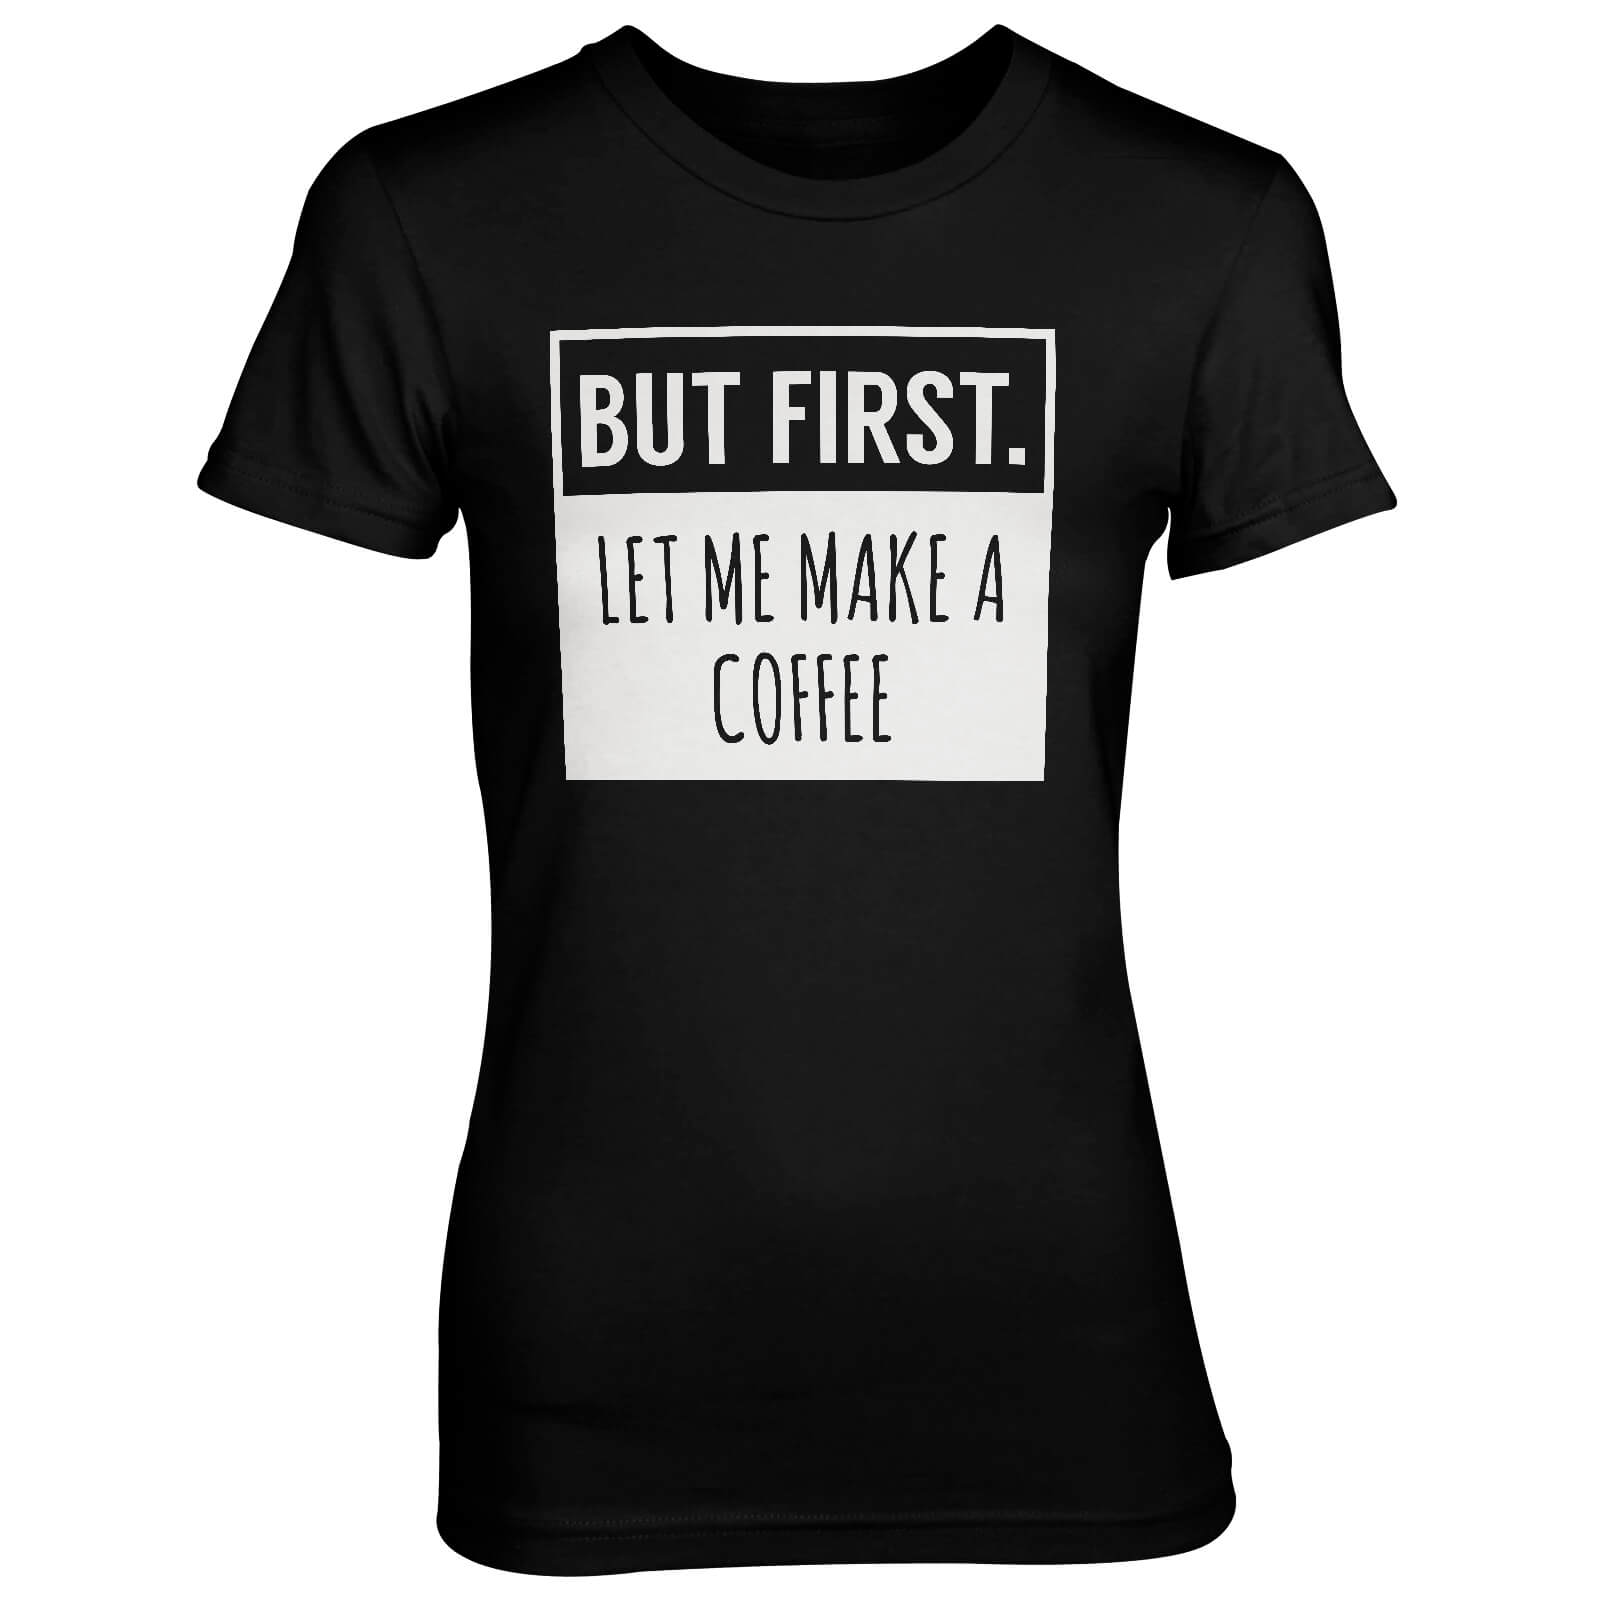 But First Let Me Make A Coffee Women's Black T-Shirt - M - Black